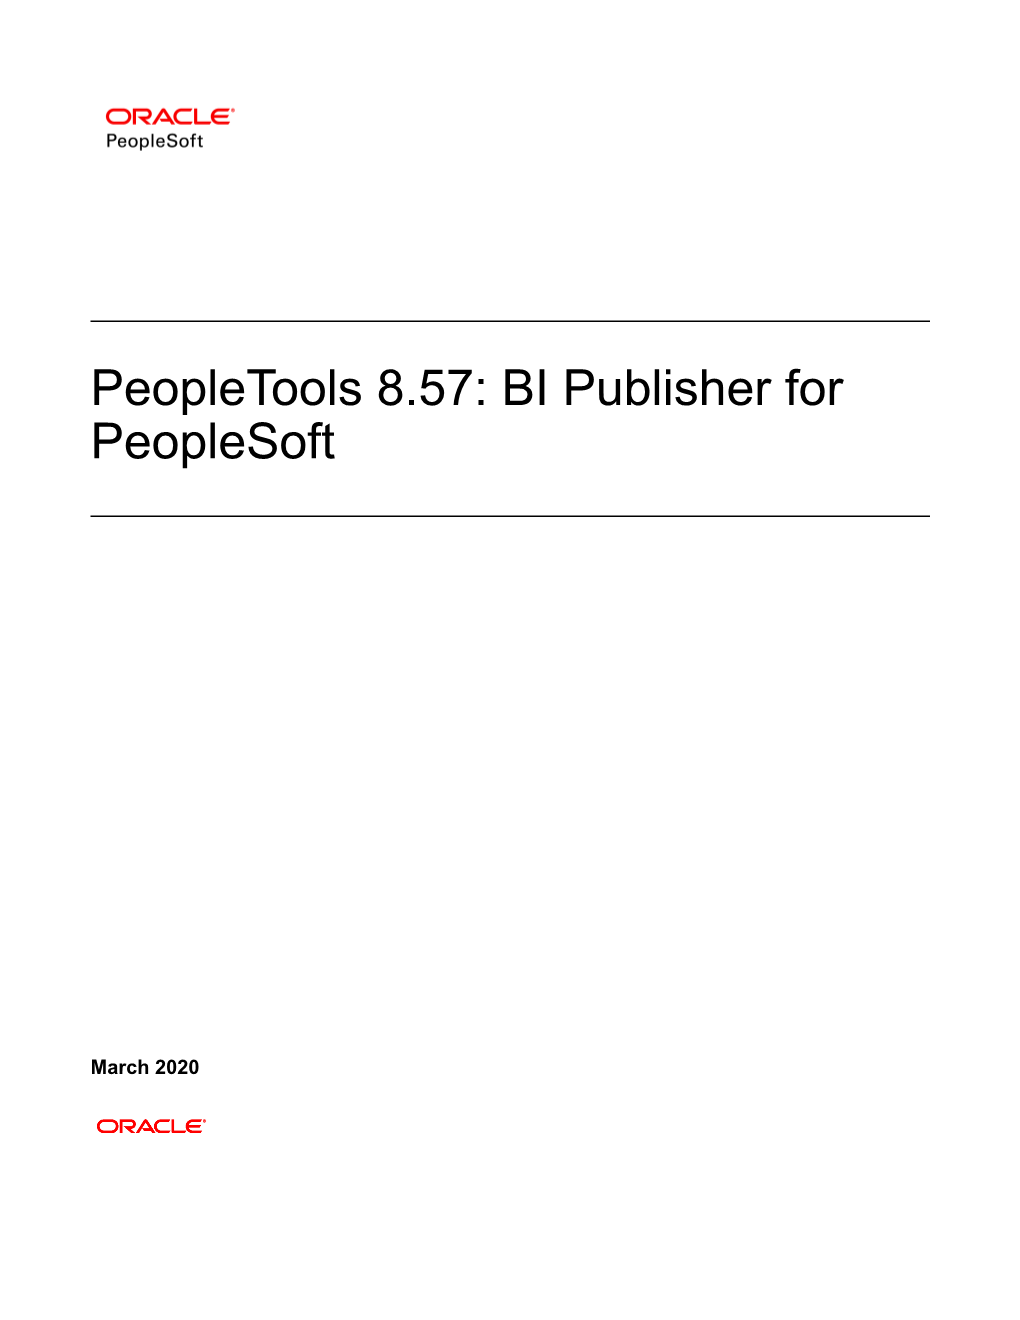 BI Publisher for Peoplesoft